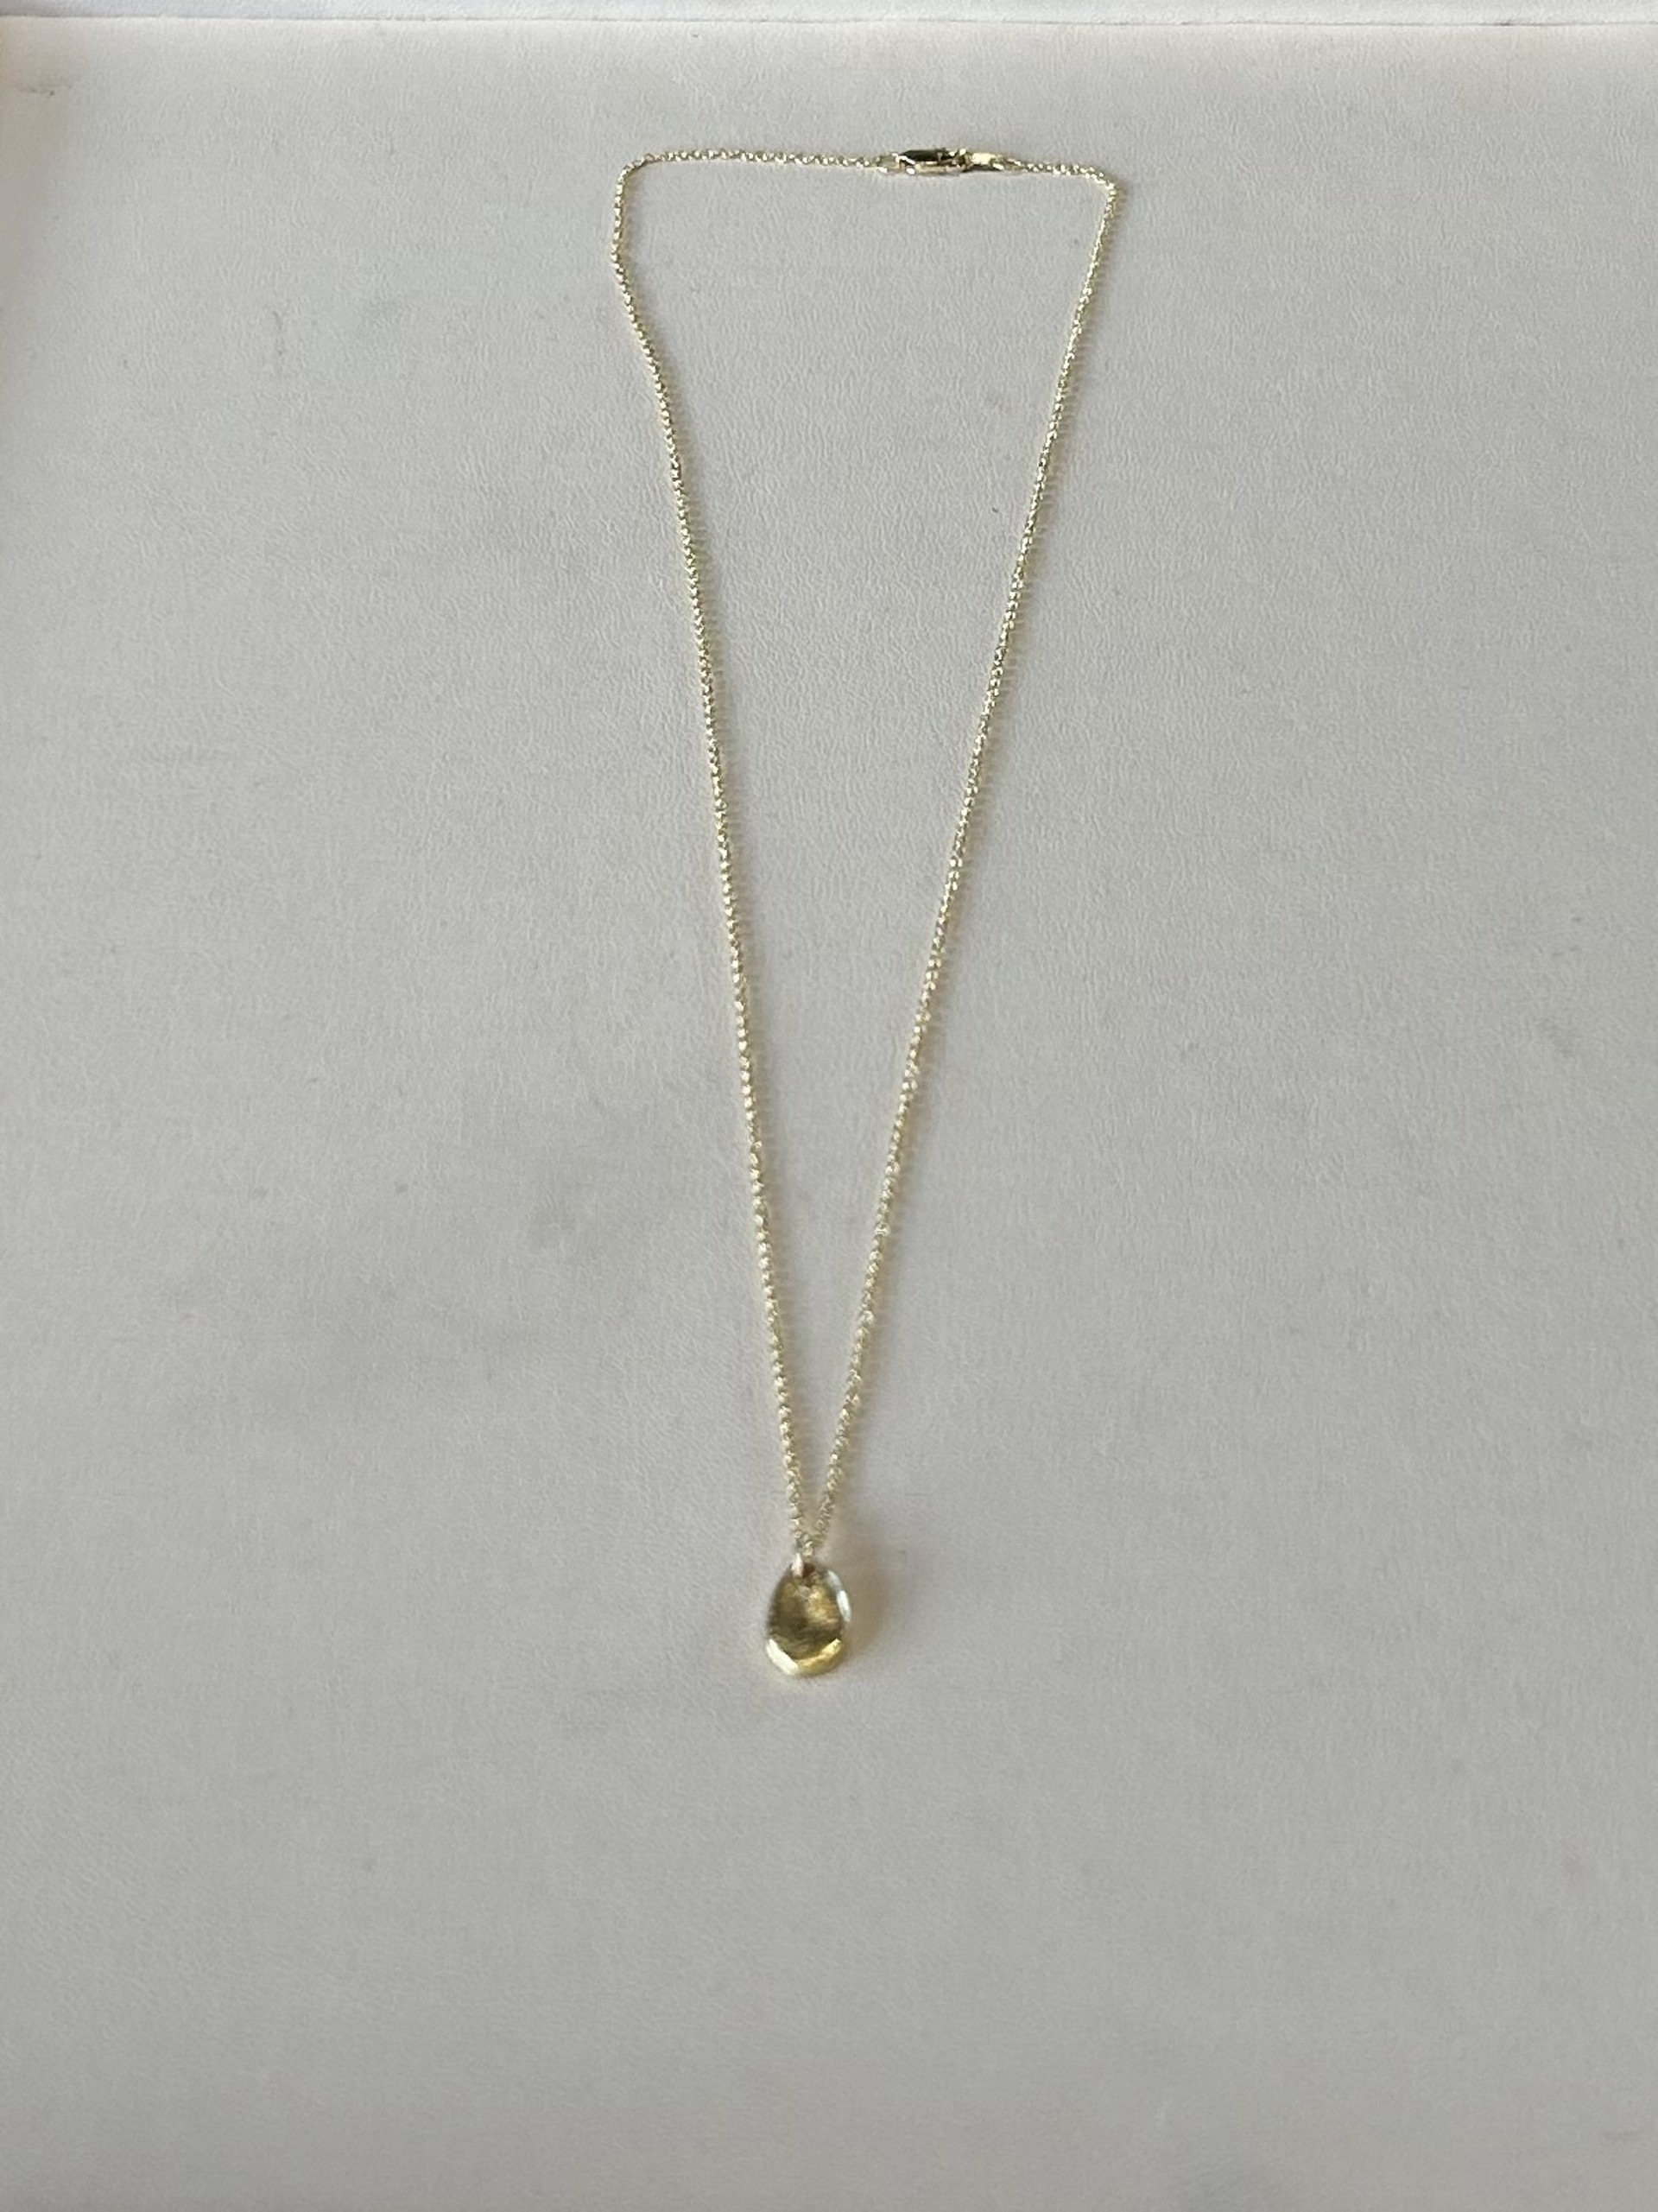 LHN18- small tear drop necklace 18K by Leandra Hill